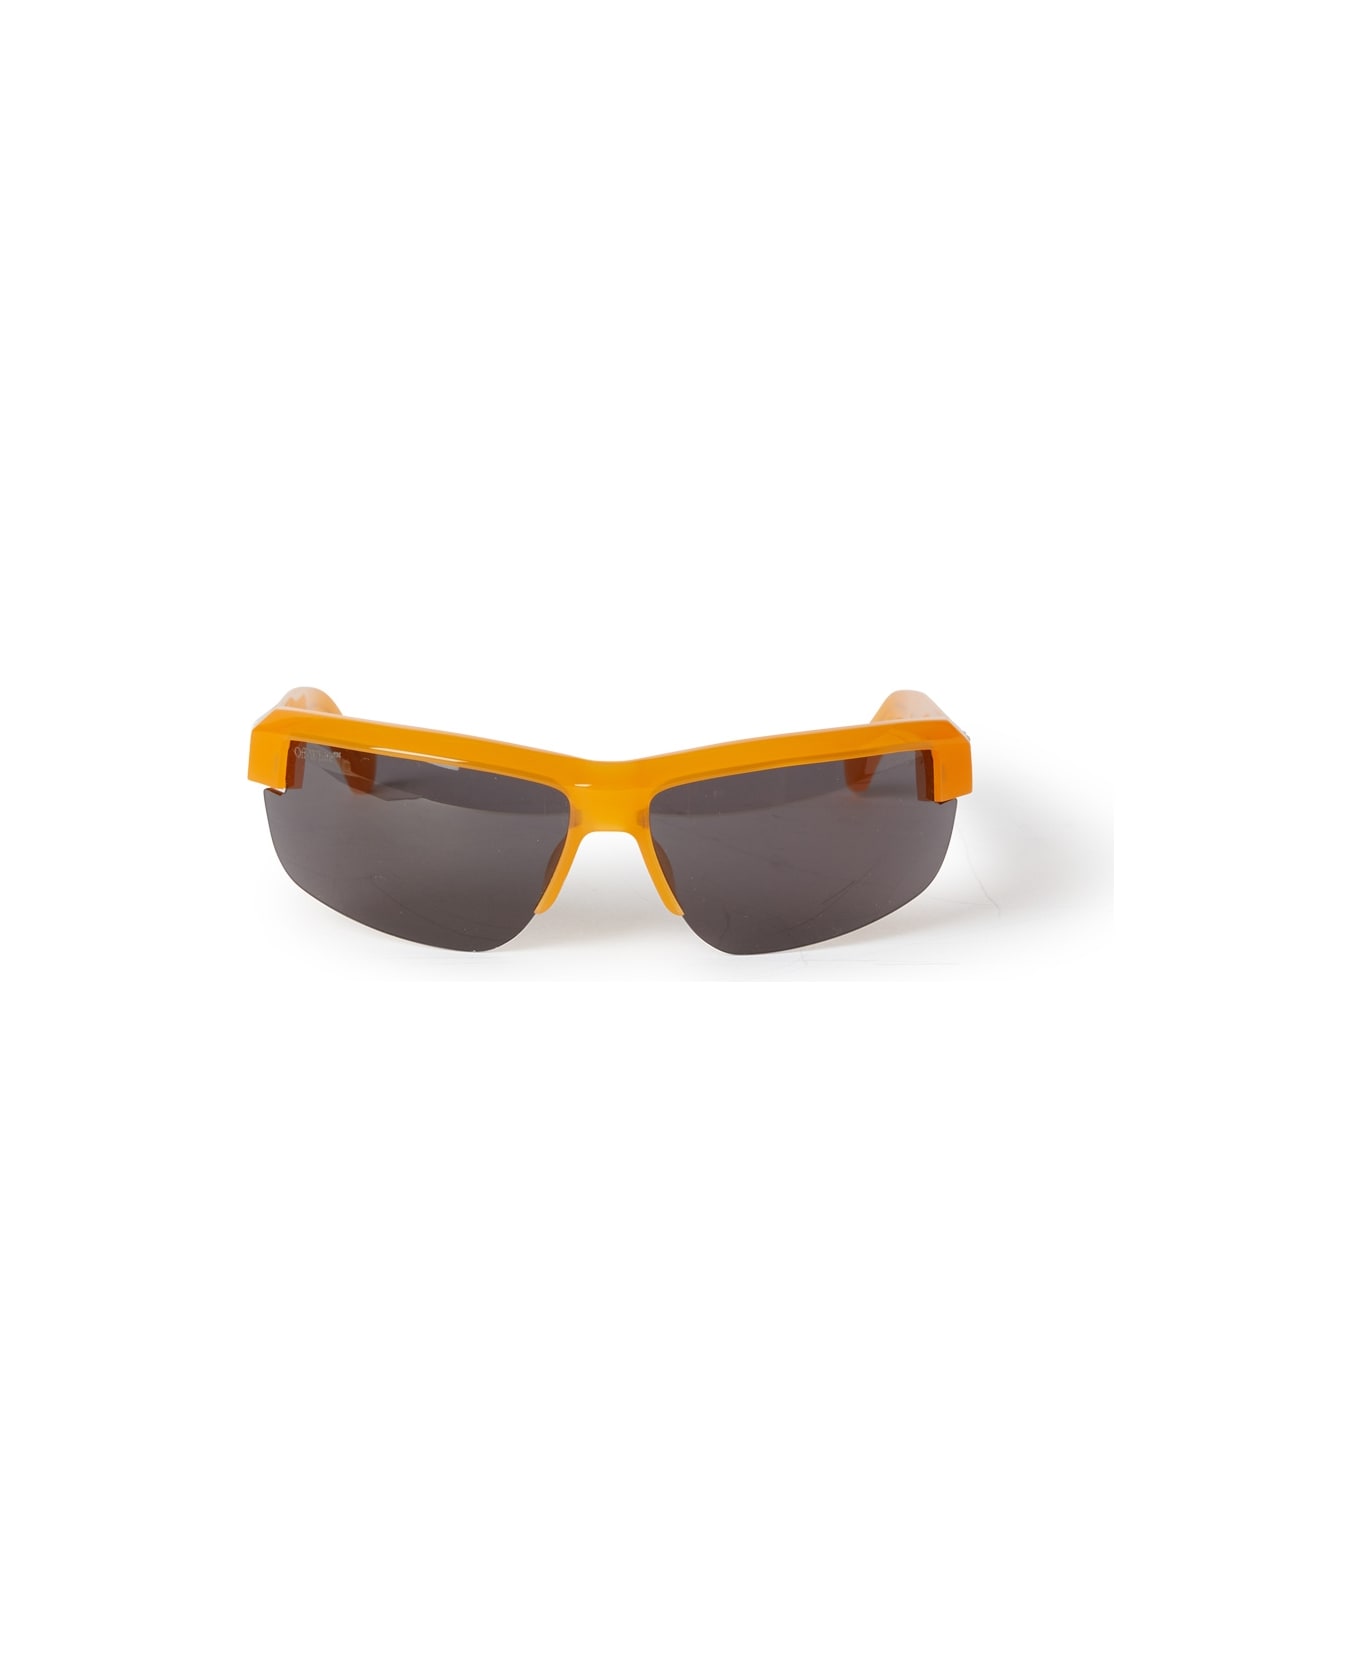 Off-White TOLEDO SUNGLASSES Sunglasses - Orange